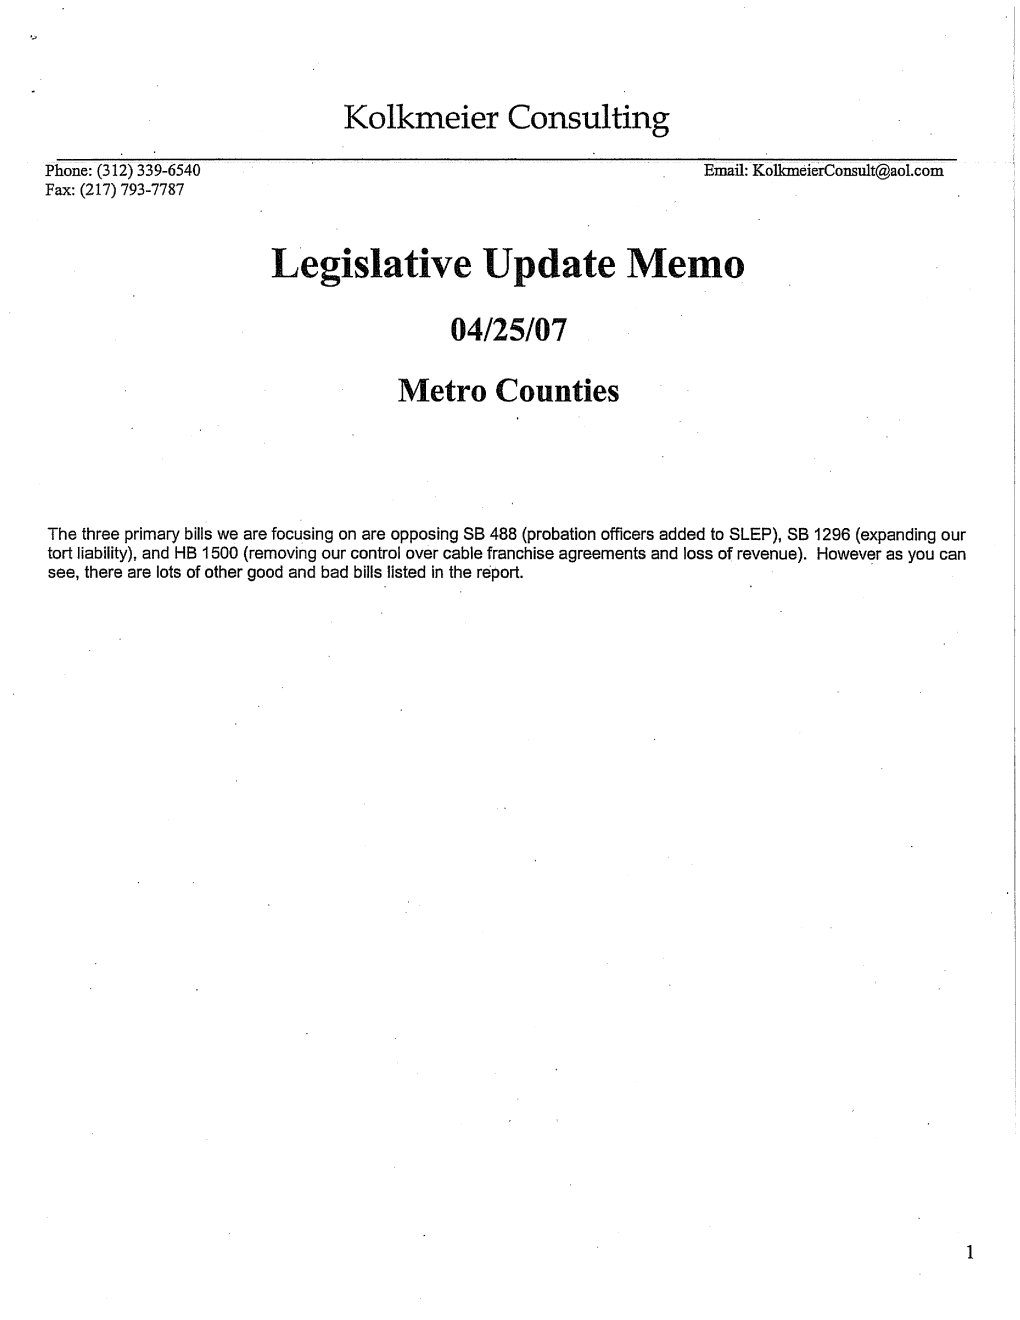 Legislative Update Memo 04/25/07 Metro Counties